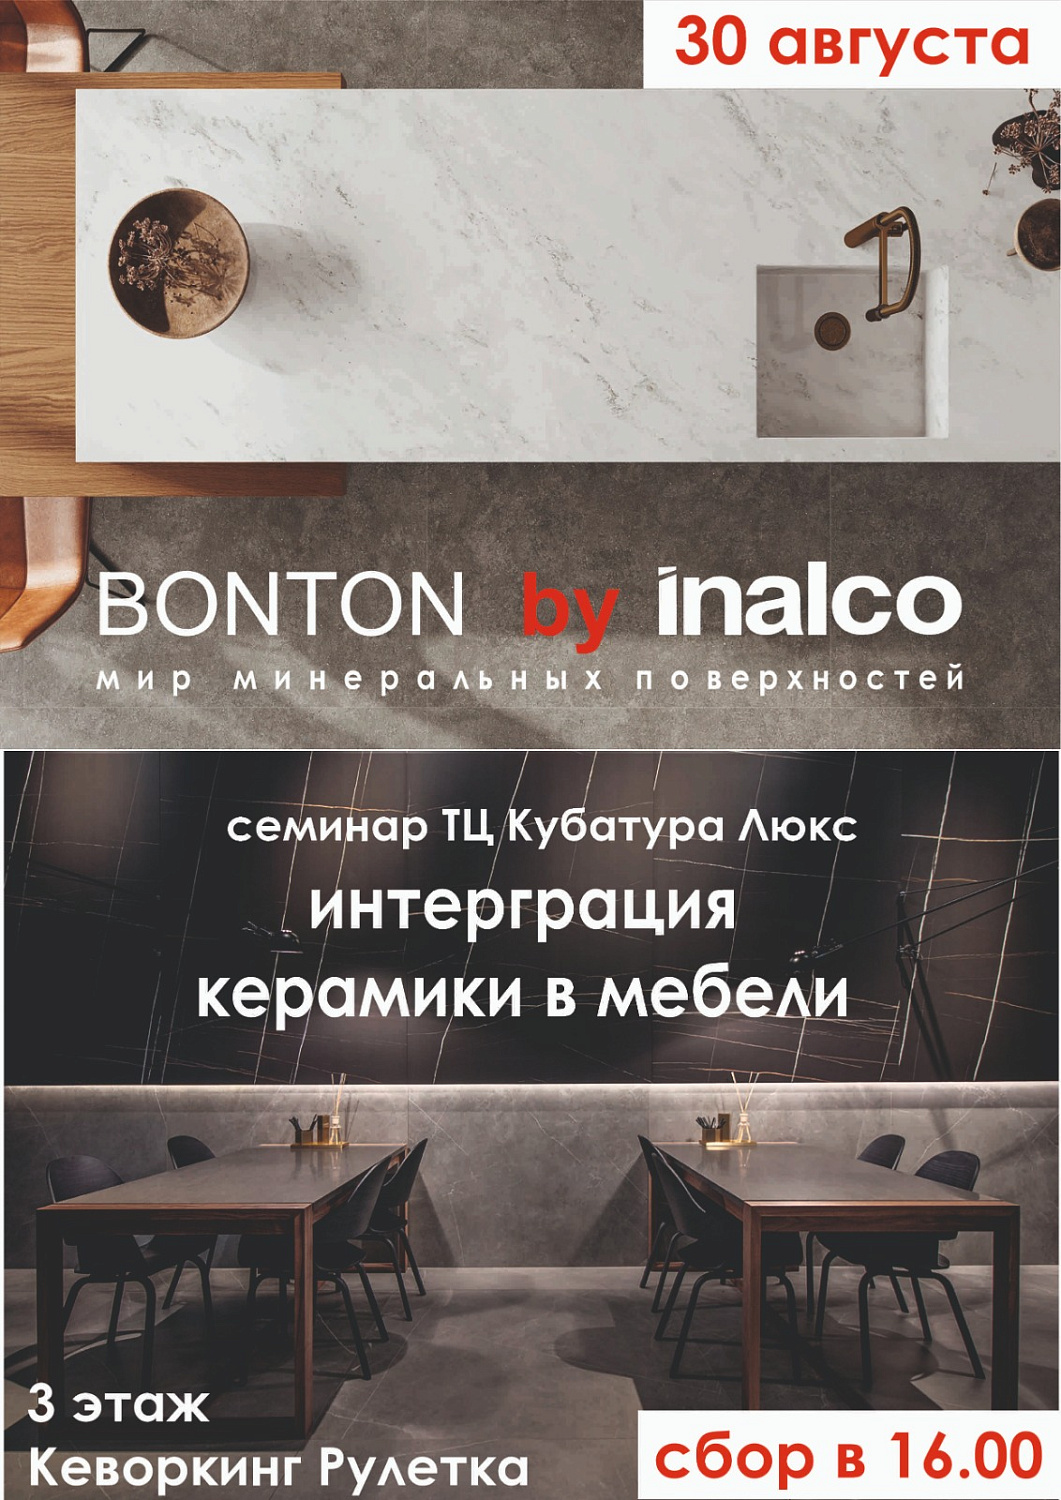 Семинар BonTon by Inalco 30 августа